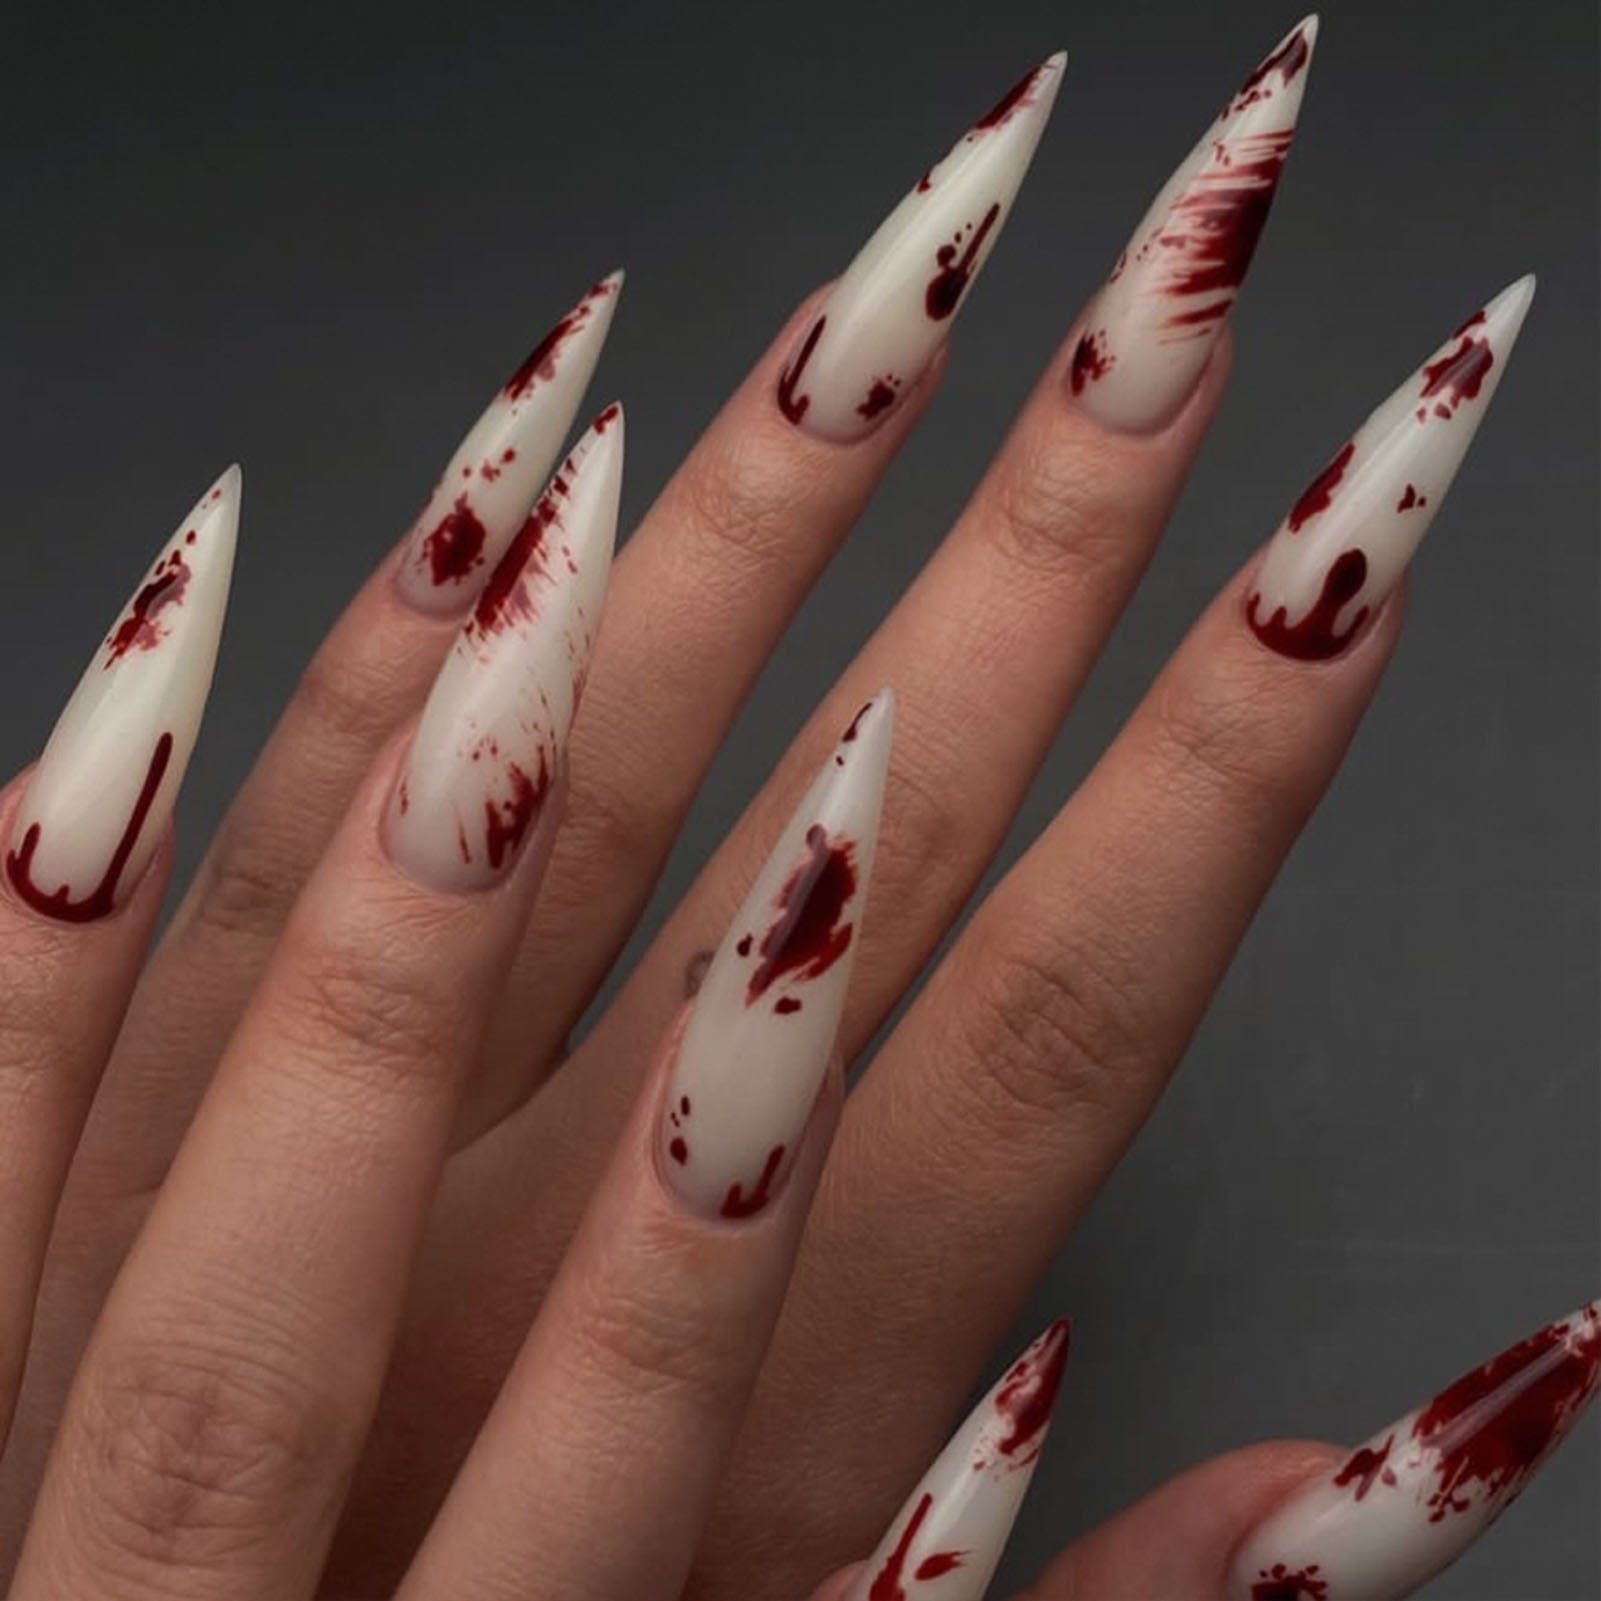 24pcs Long Pointed Halloween Nail Tips Bloodstain Decor Fake Nails Stiletto Press On False Nails Professional Manicure Nail Art Basso & Brooke